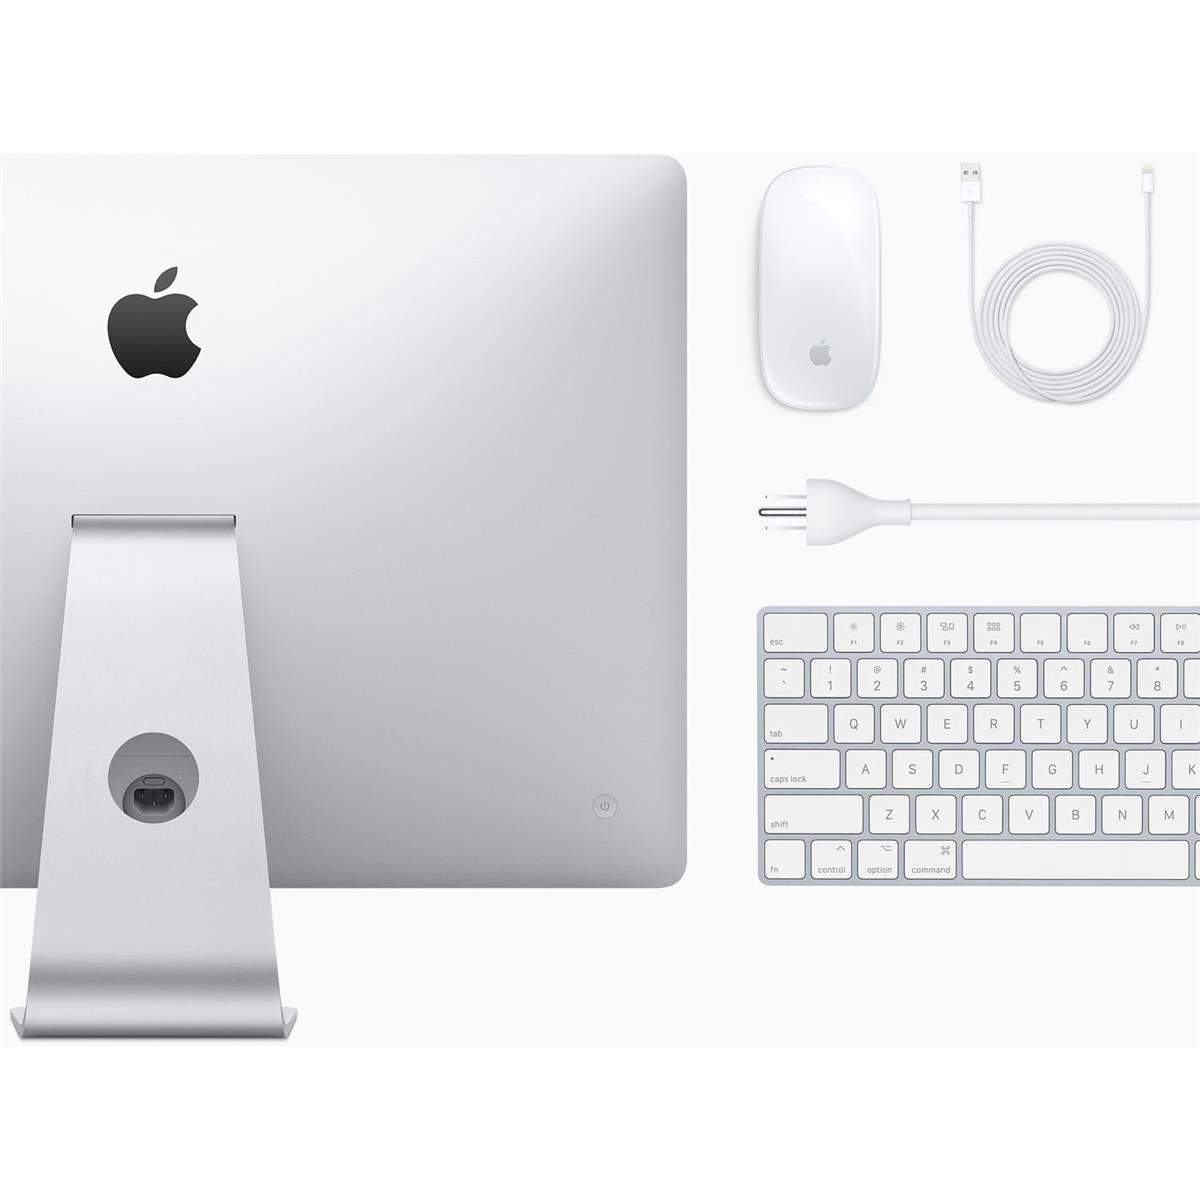 doel Brullen George Bernard 2017 27″ iMac 3.4GHz quad-core Intel Core i5 with Retina 5K display  Thunderbolt 3 (USB-C) ports – MacPro-LA